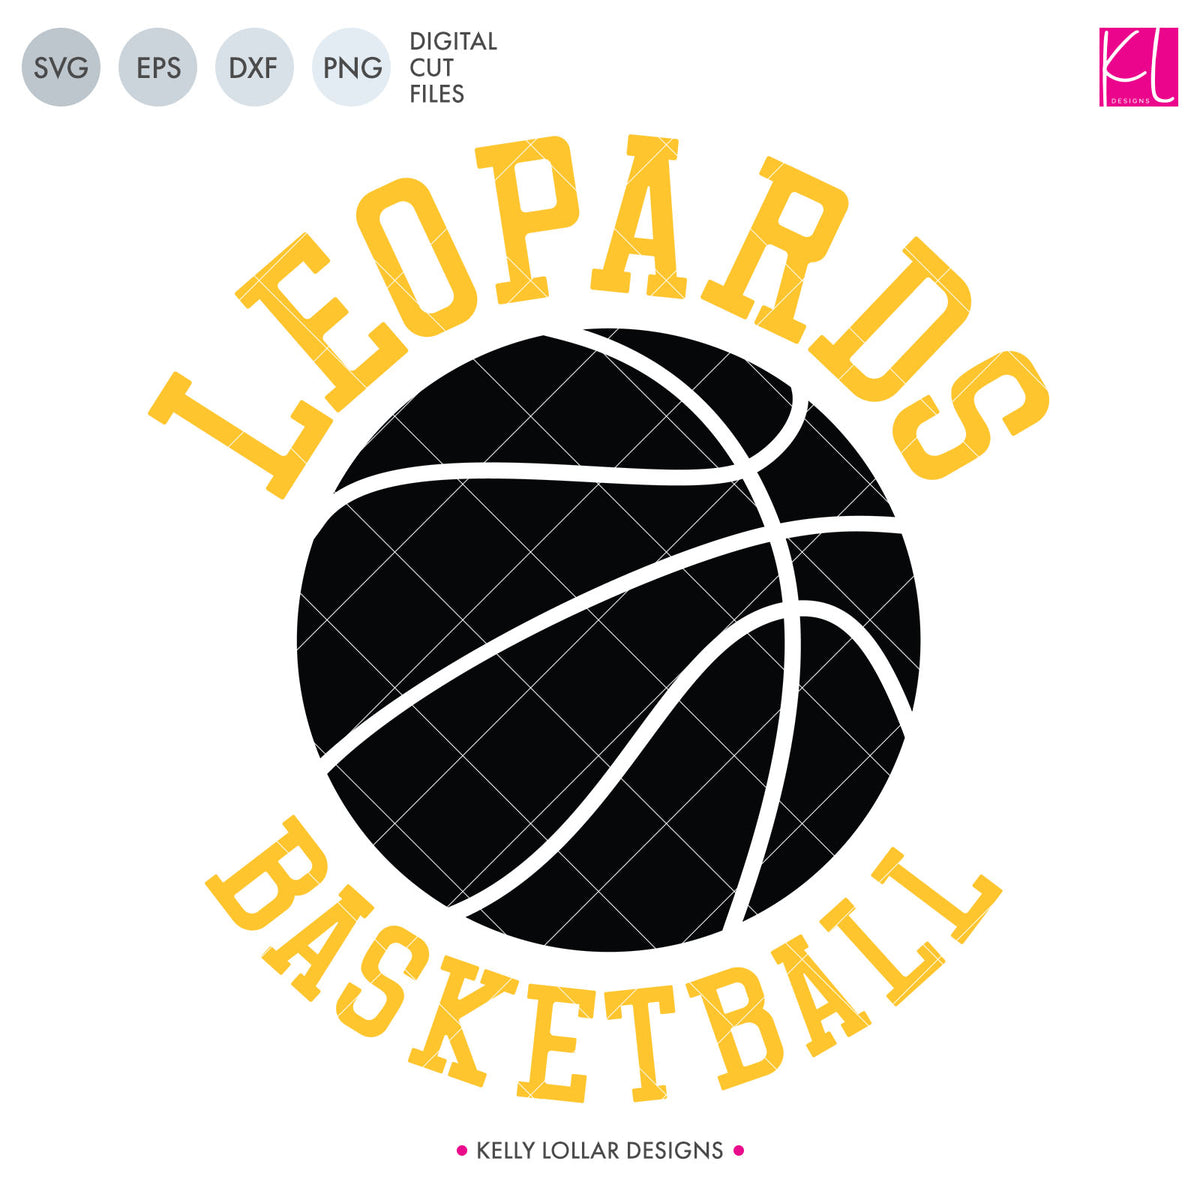 Leopards Basketball Bundle | SVG DXF EPS PNG Cut Files